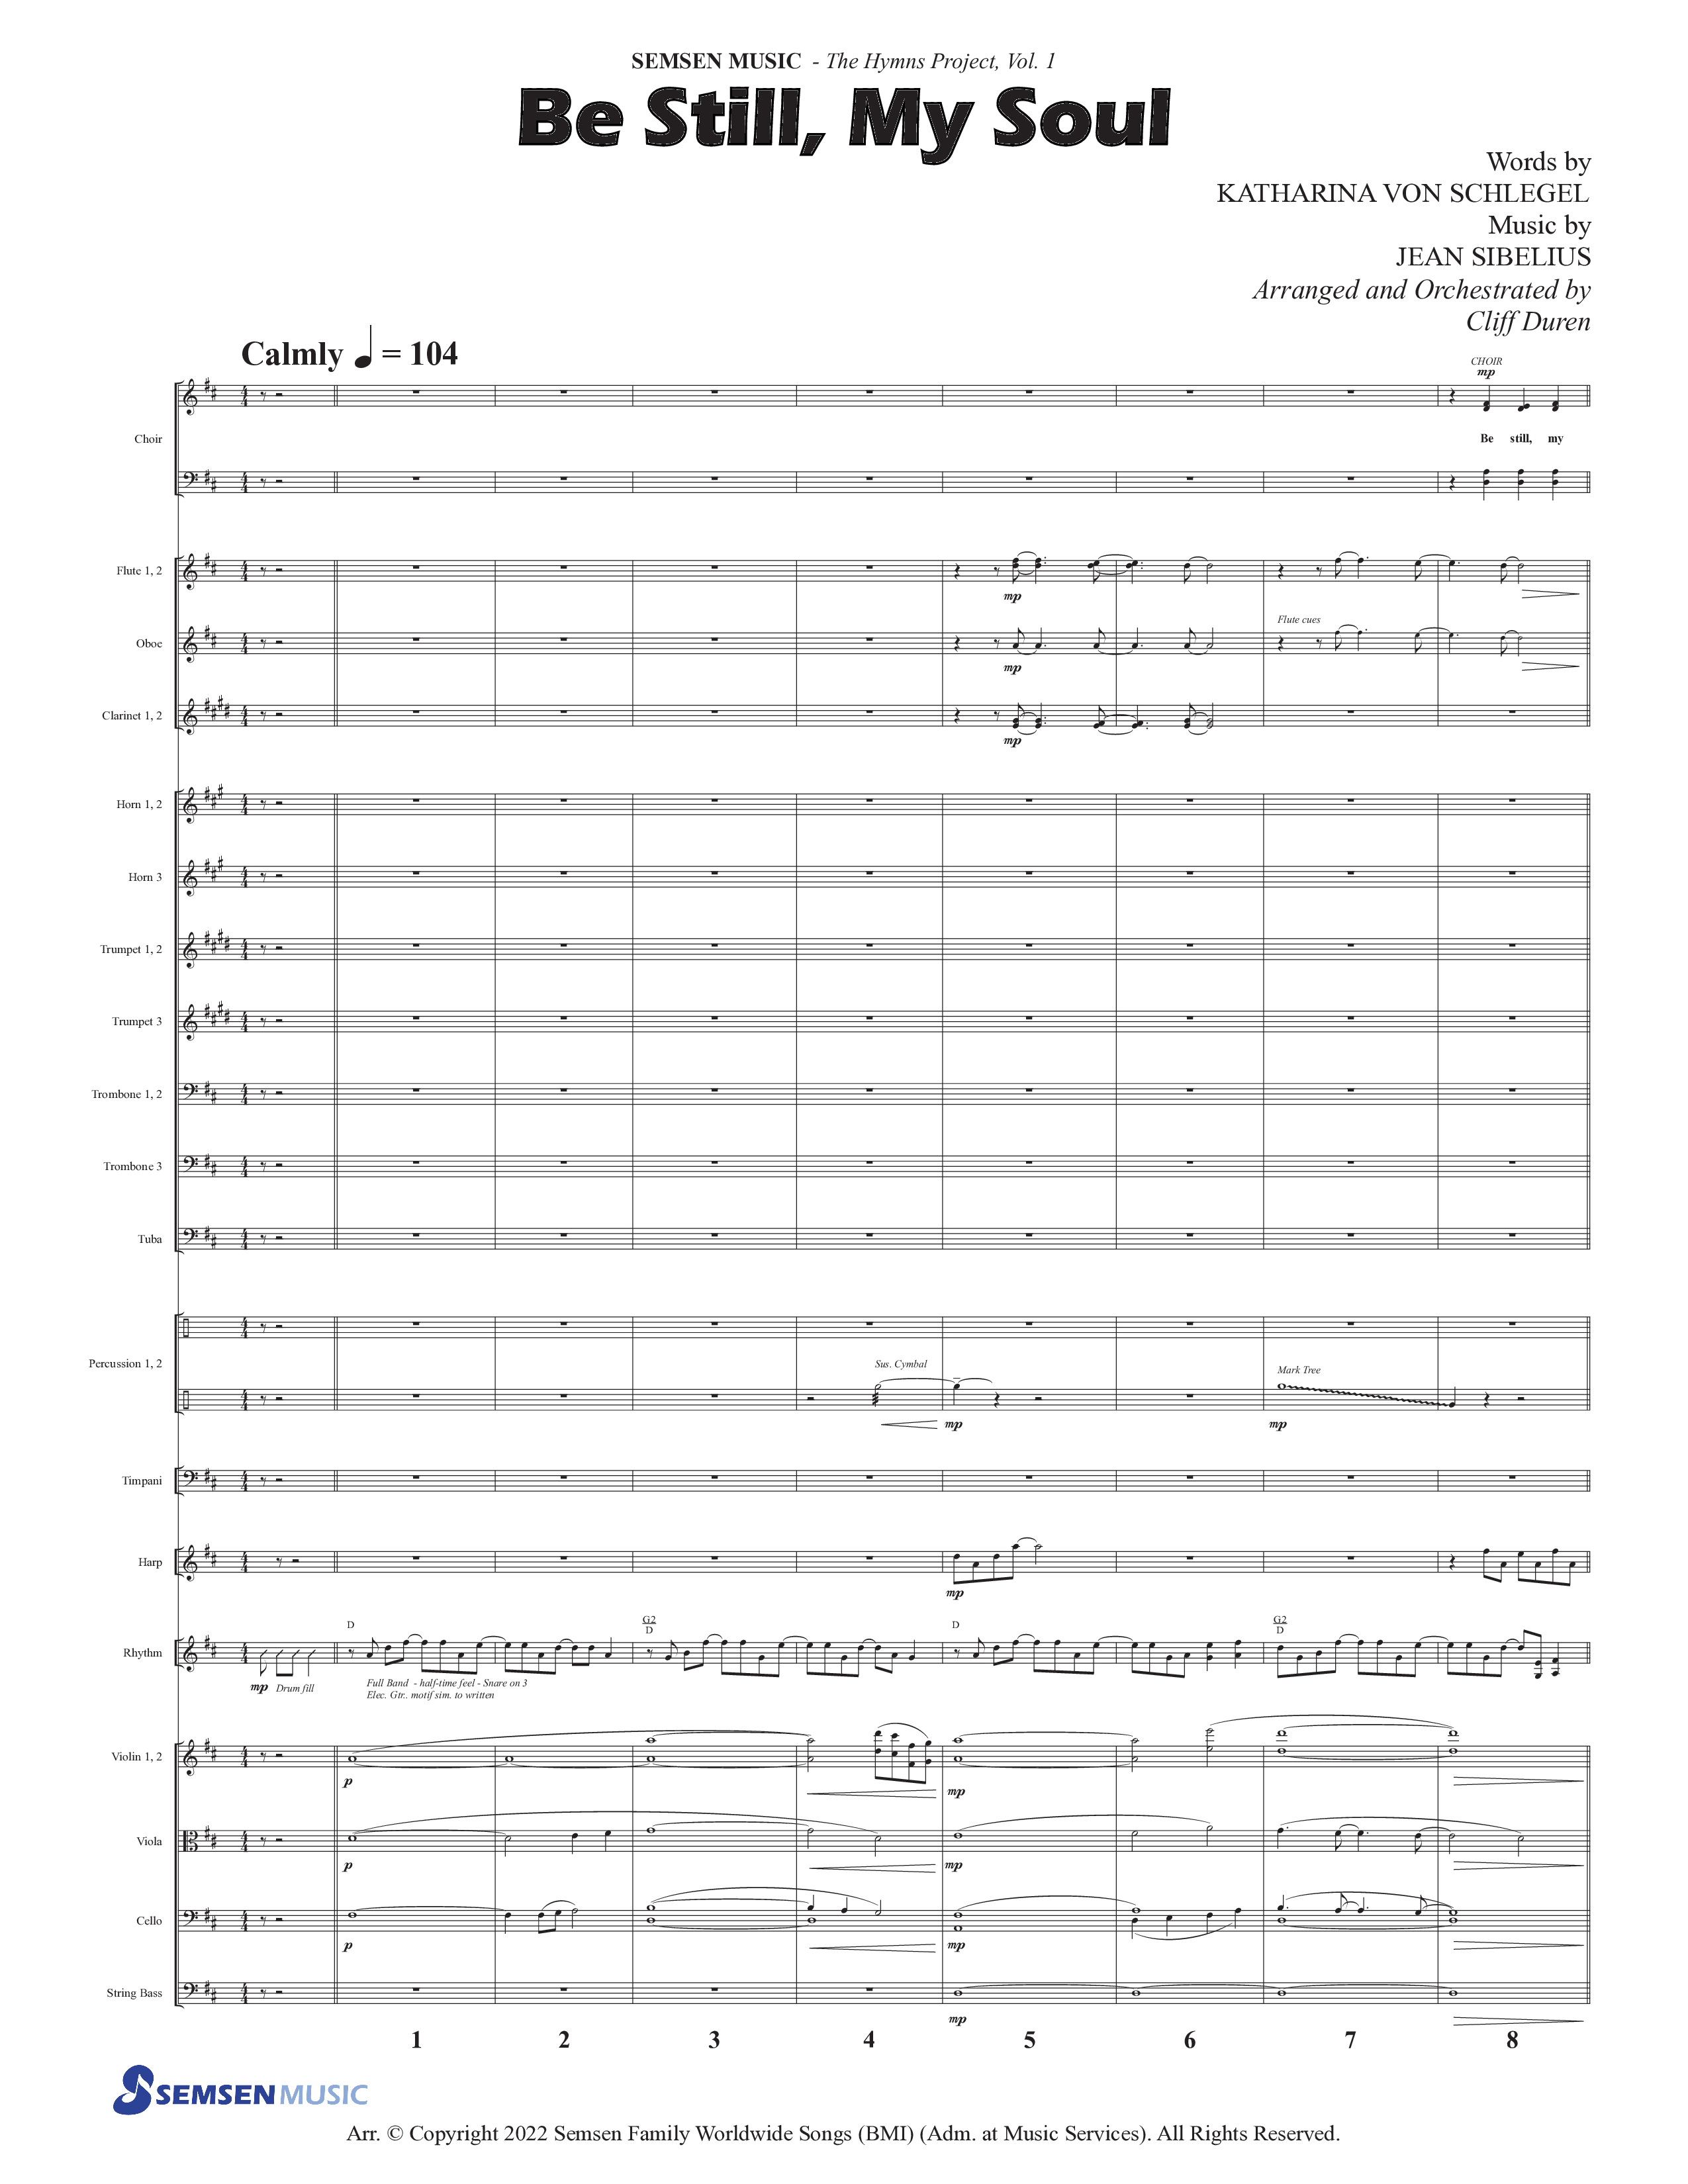 Be Still My Soul (Choral Anthem SATB) Conductor's Score (Semsen Music / Arr. Cliff Duren)